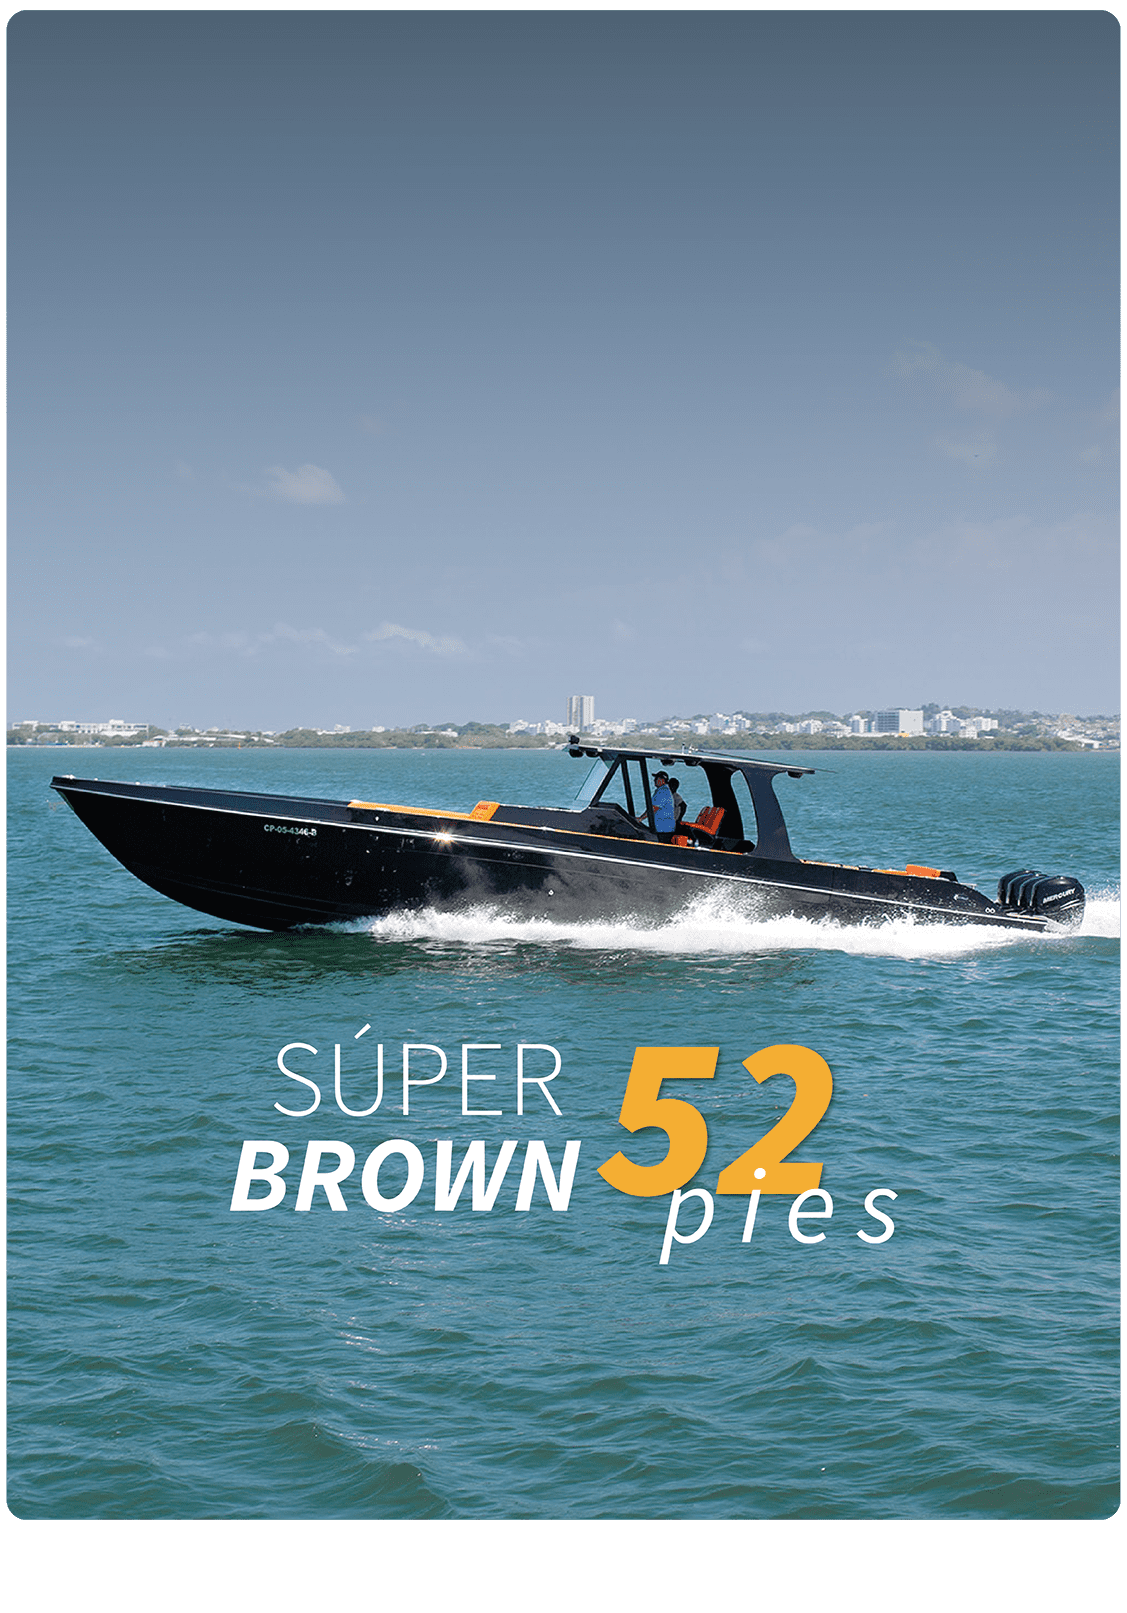 bote super brown 52